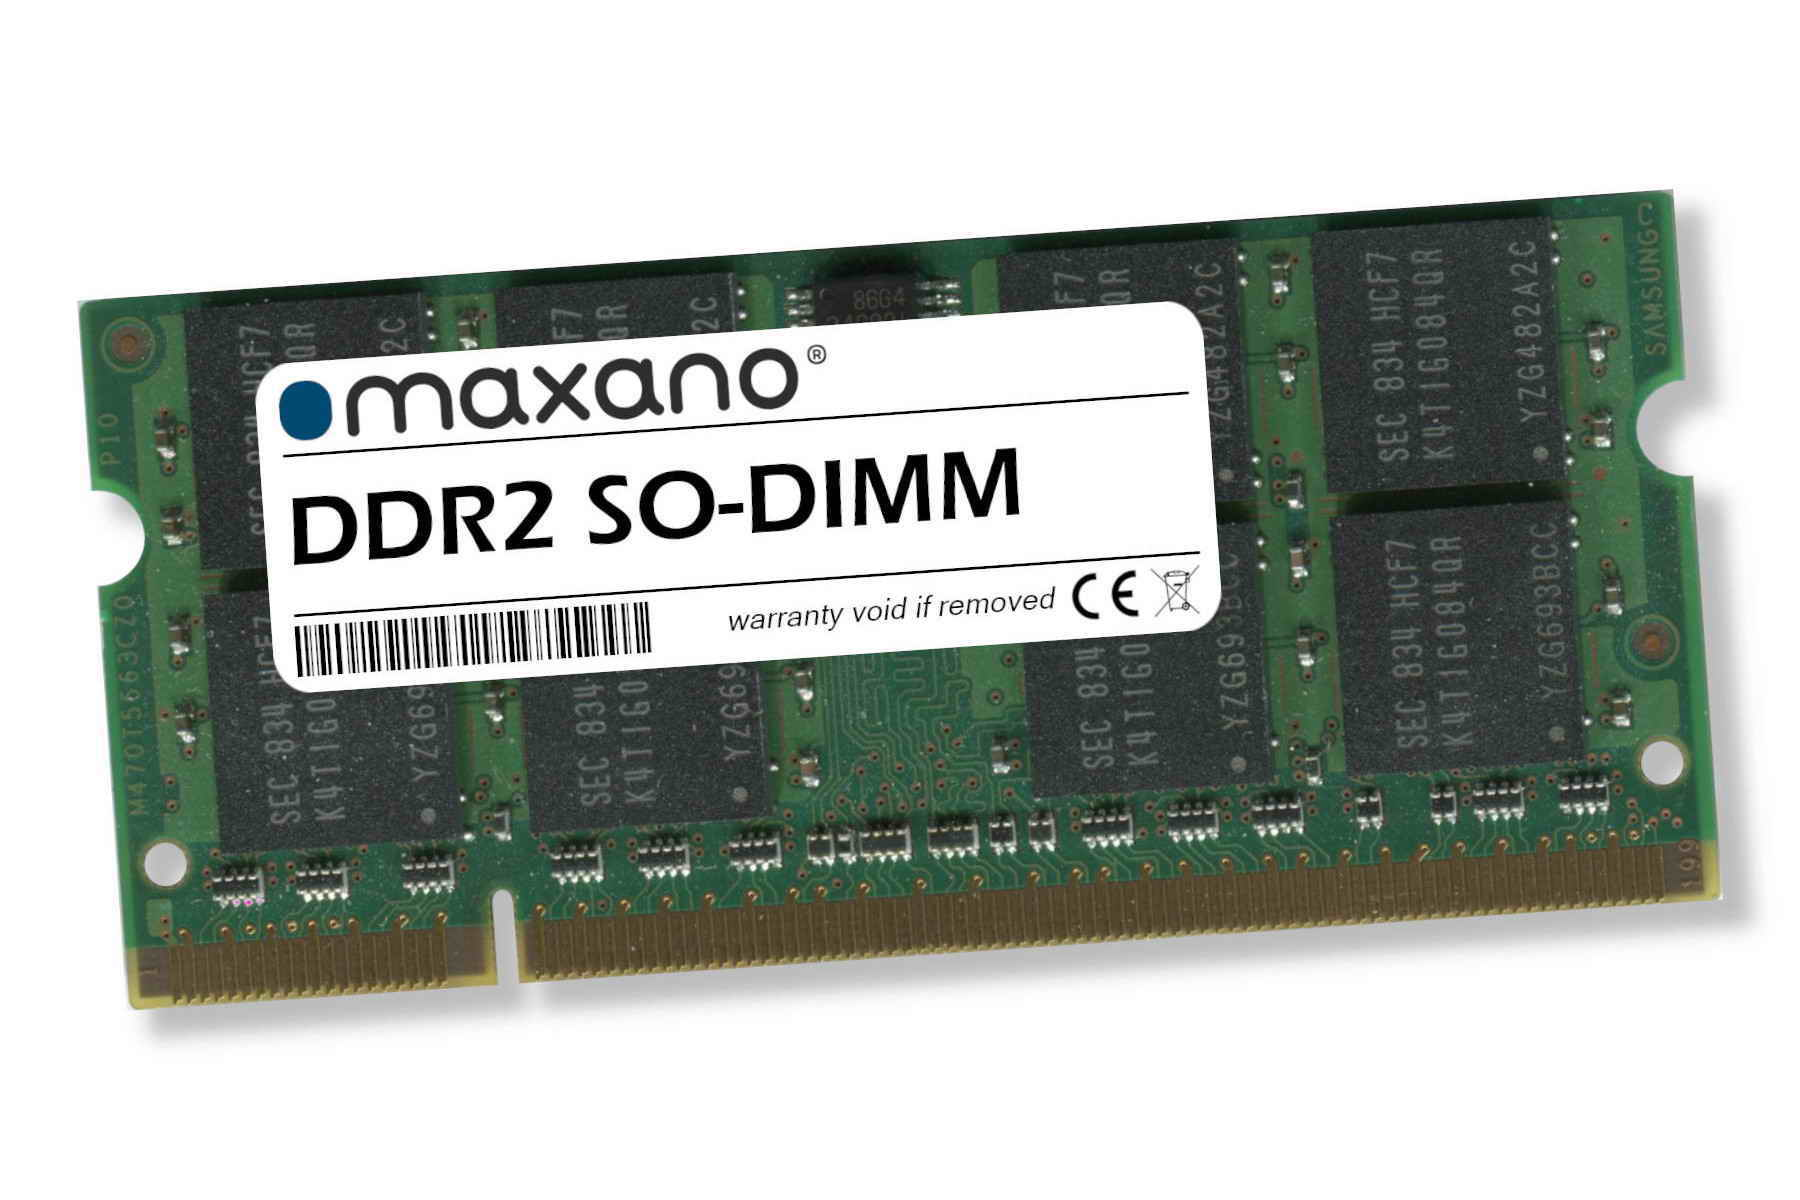 4 4GB Compaq Arbeitsspeicher / HPE MAXANO (PC2-5300 SDRAM HP 6710b für RAM SO-DIMM) GB